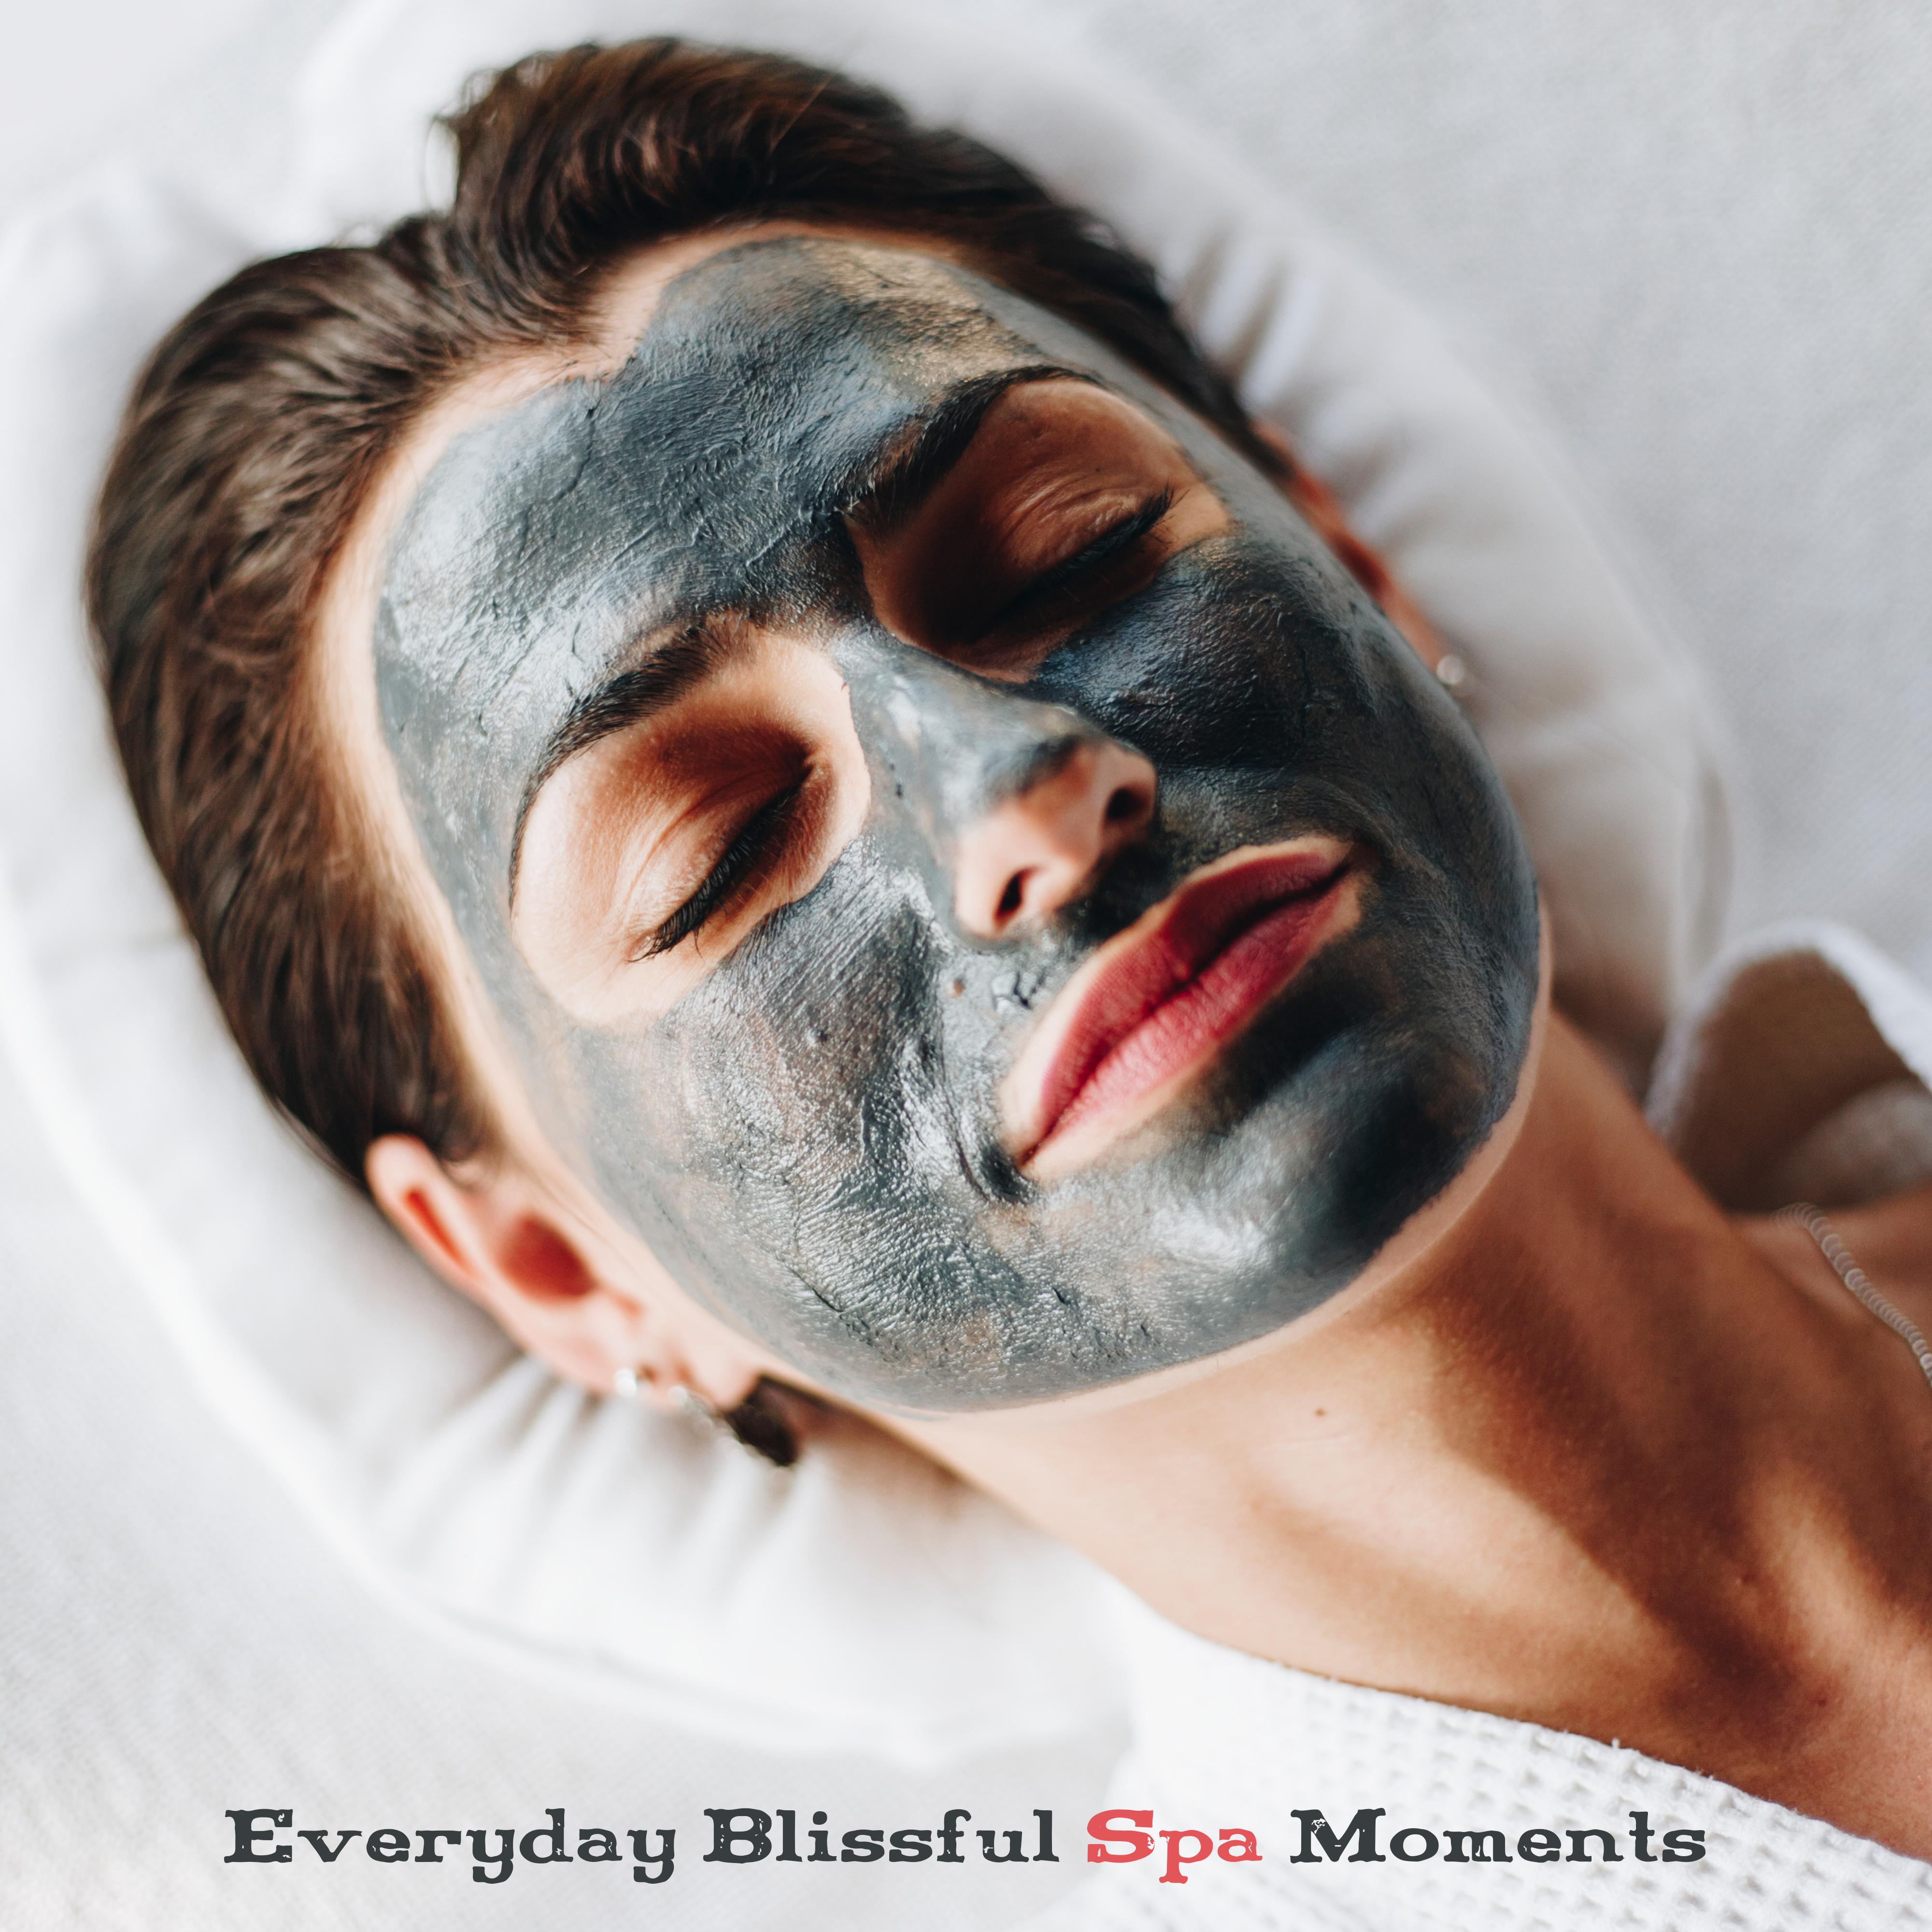 Everyday Blissful Spa Moments: New Age 2019 Music Compilation for Spa Salon, Wellness, Massage, Aromatherapy, Sauna, Hot Bath